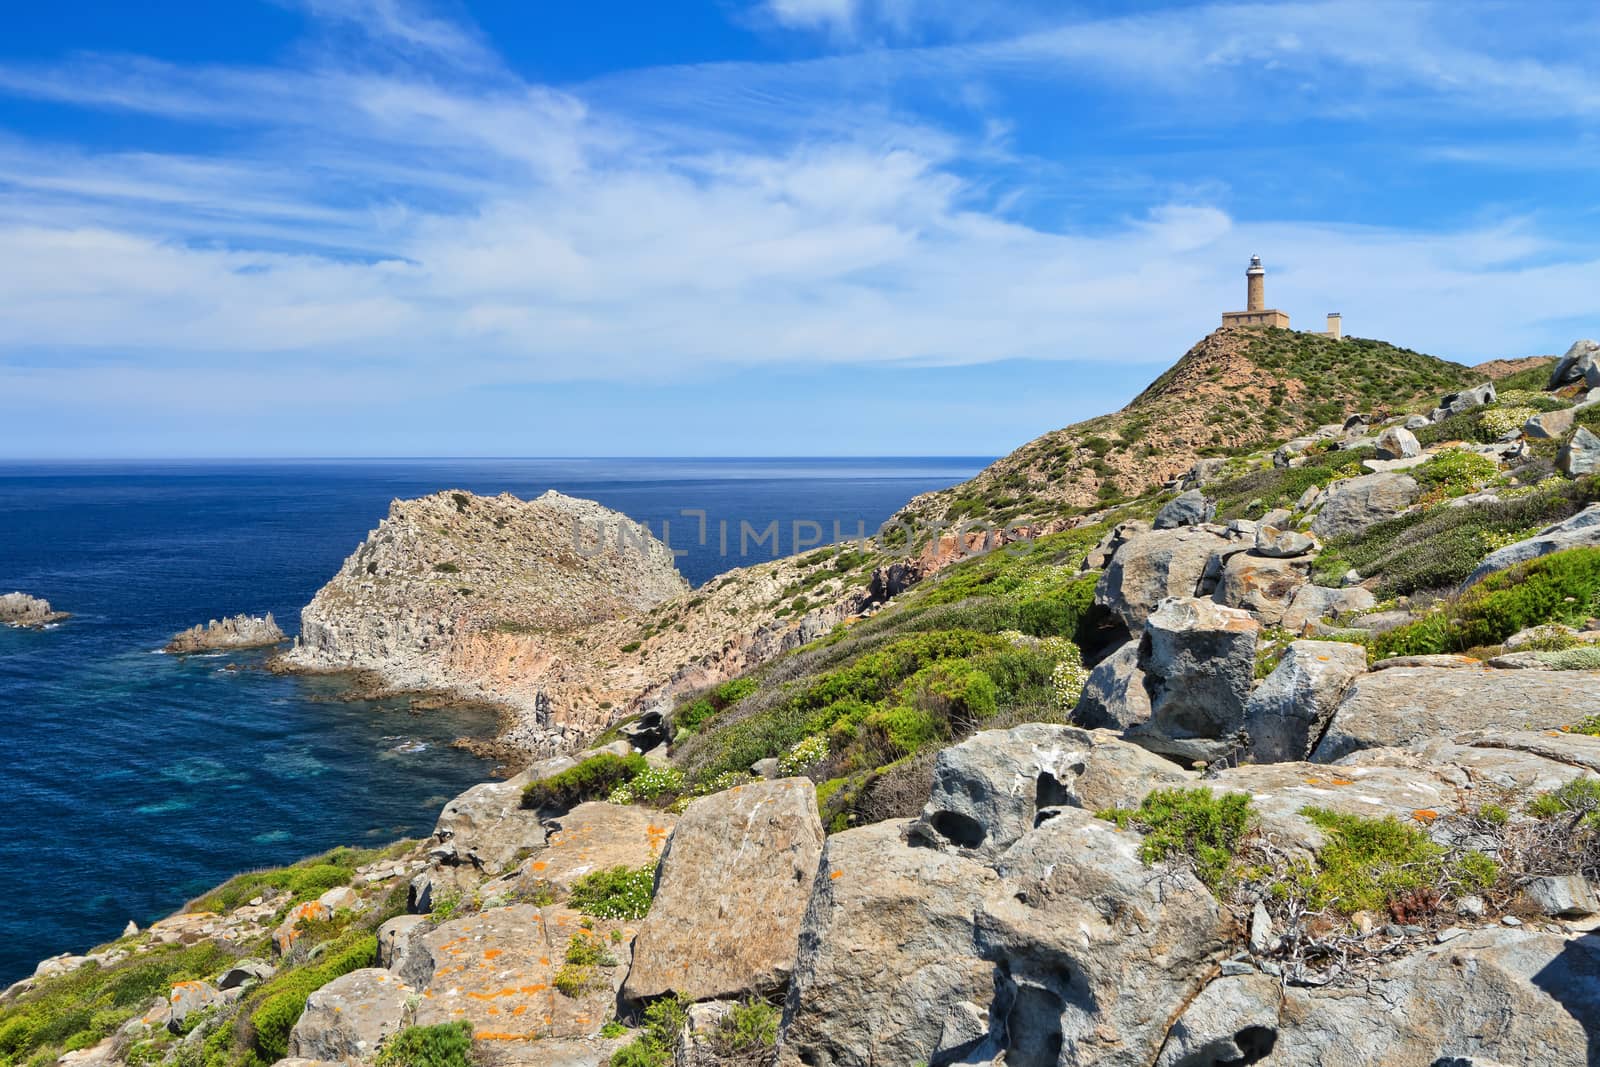 Sardinia - Capo Sandalo with lighthouse by antonioscarpi